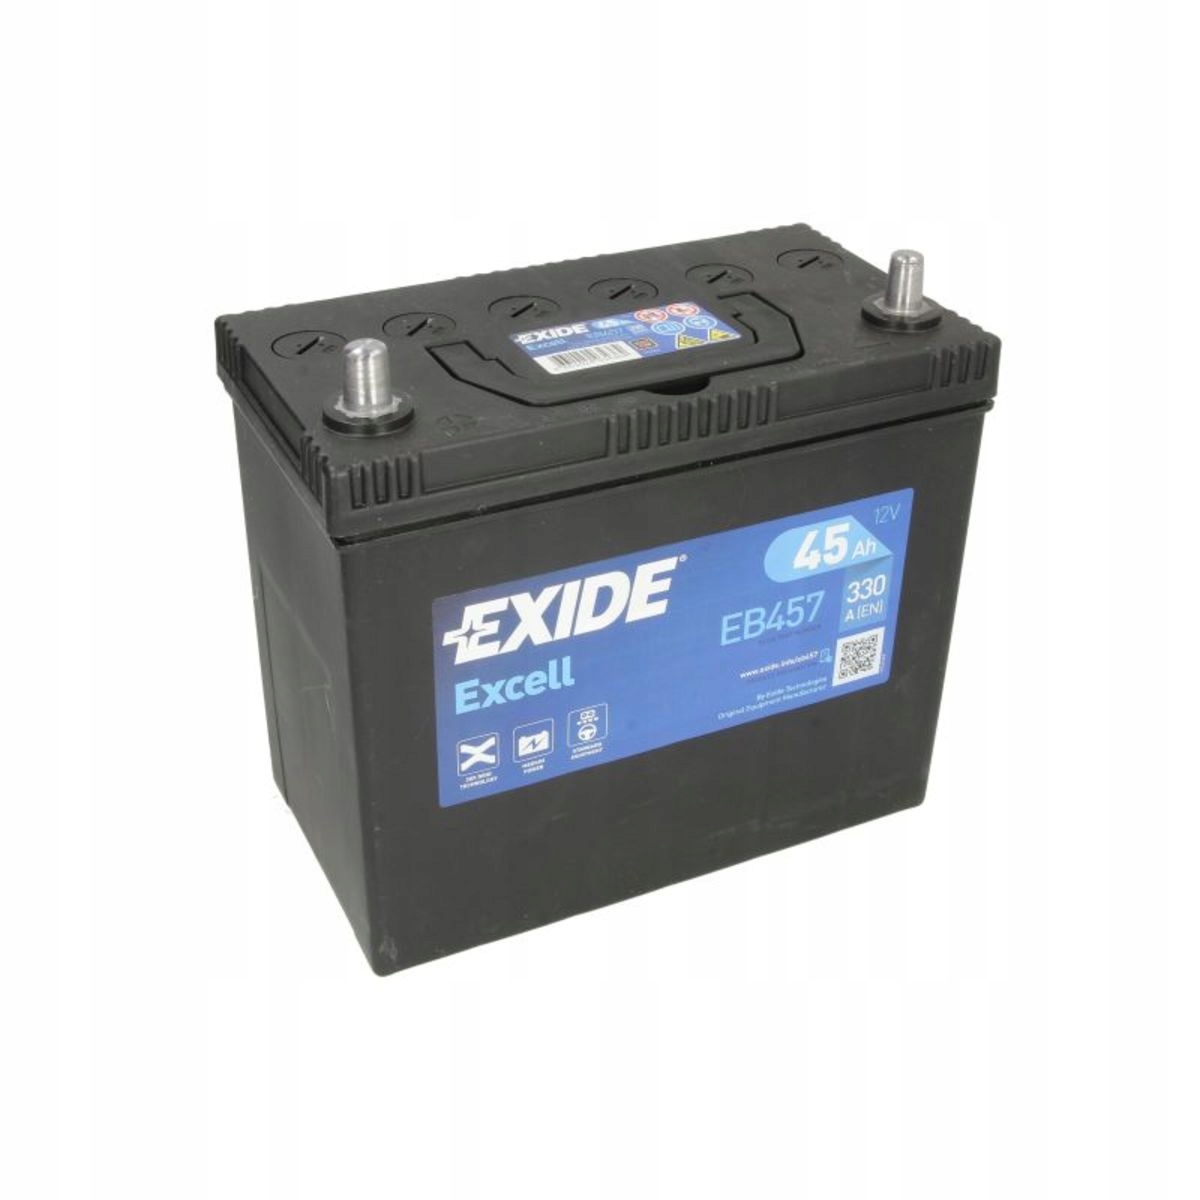 Battery exide excell 45ah 330a l - Car part Online❱ XDALYS